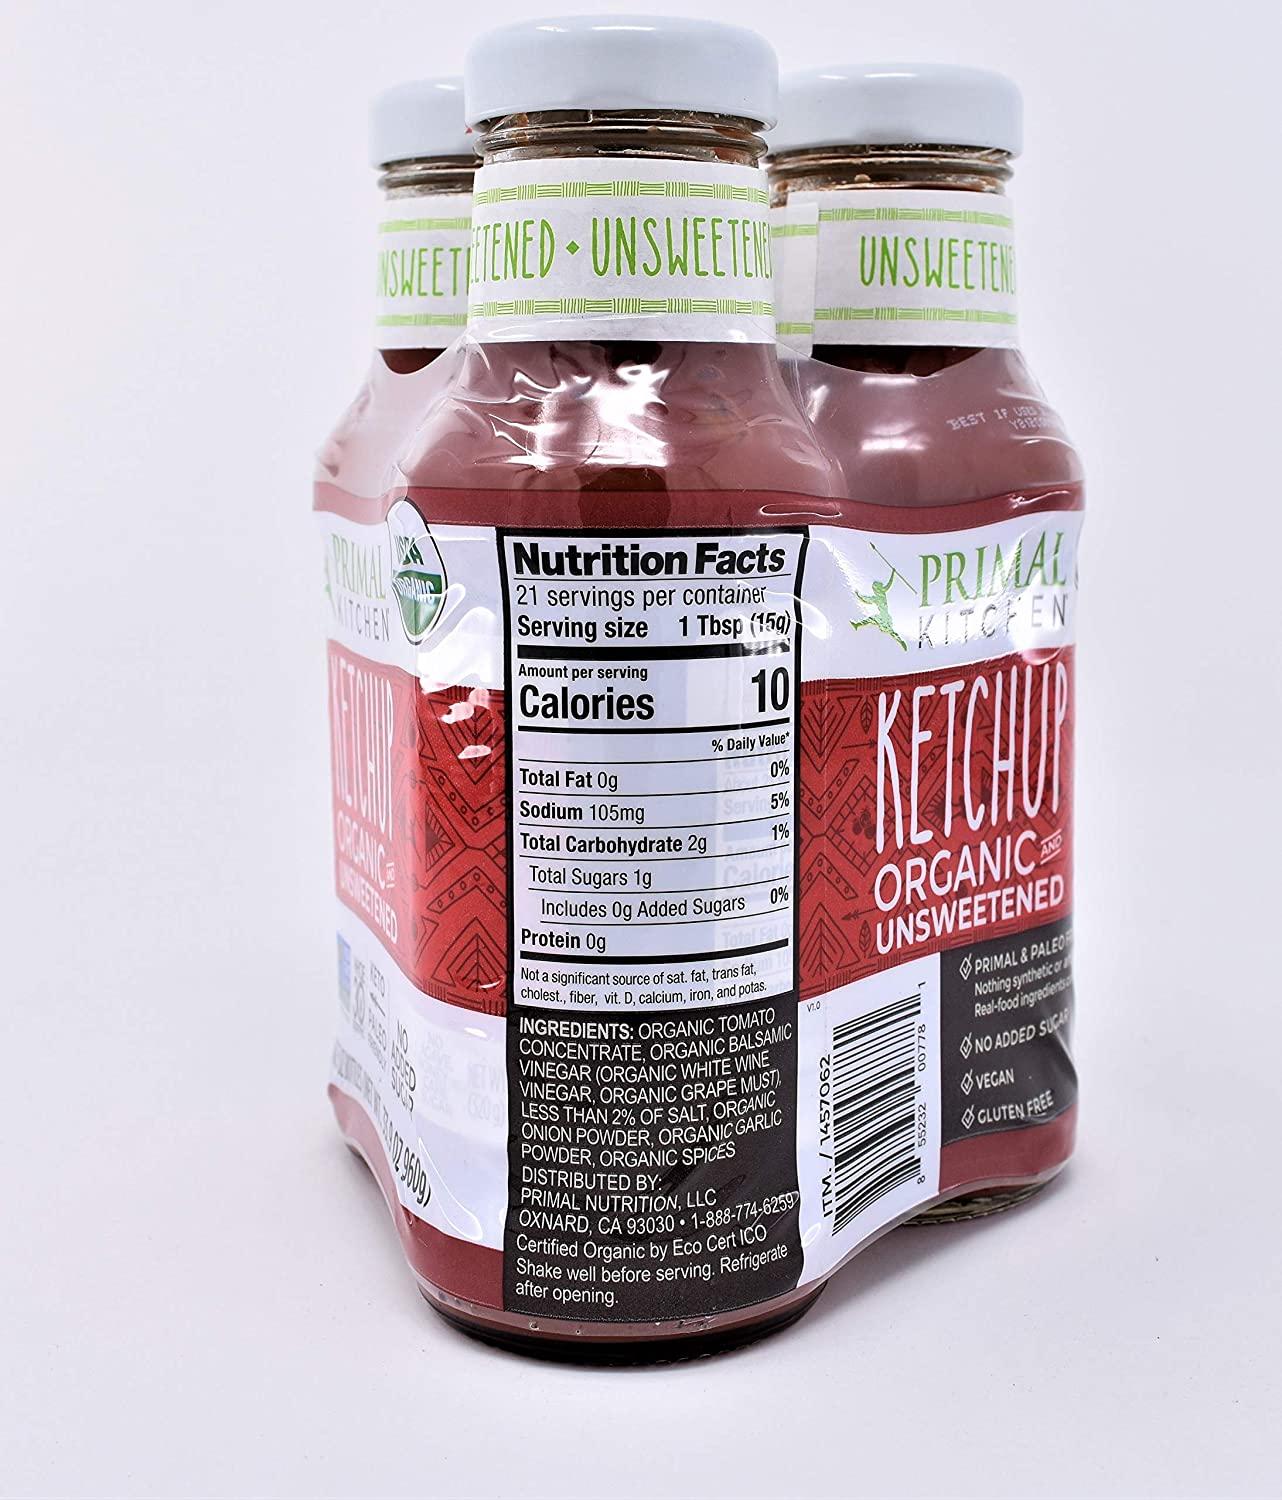 Buy Primal Kitchen Ketchup Unsweetened Organic, 11.3 Oz Online